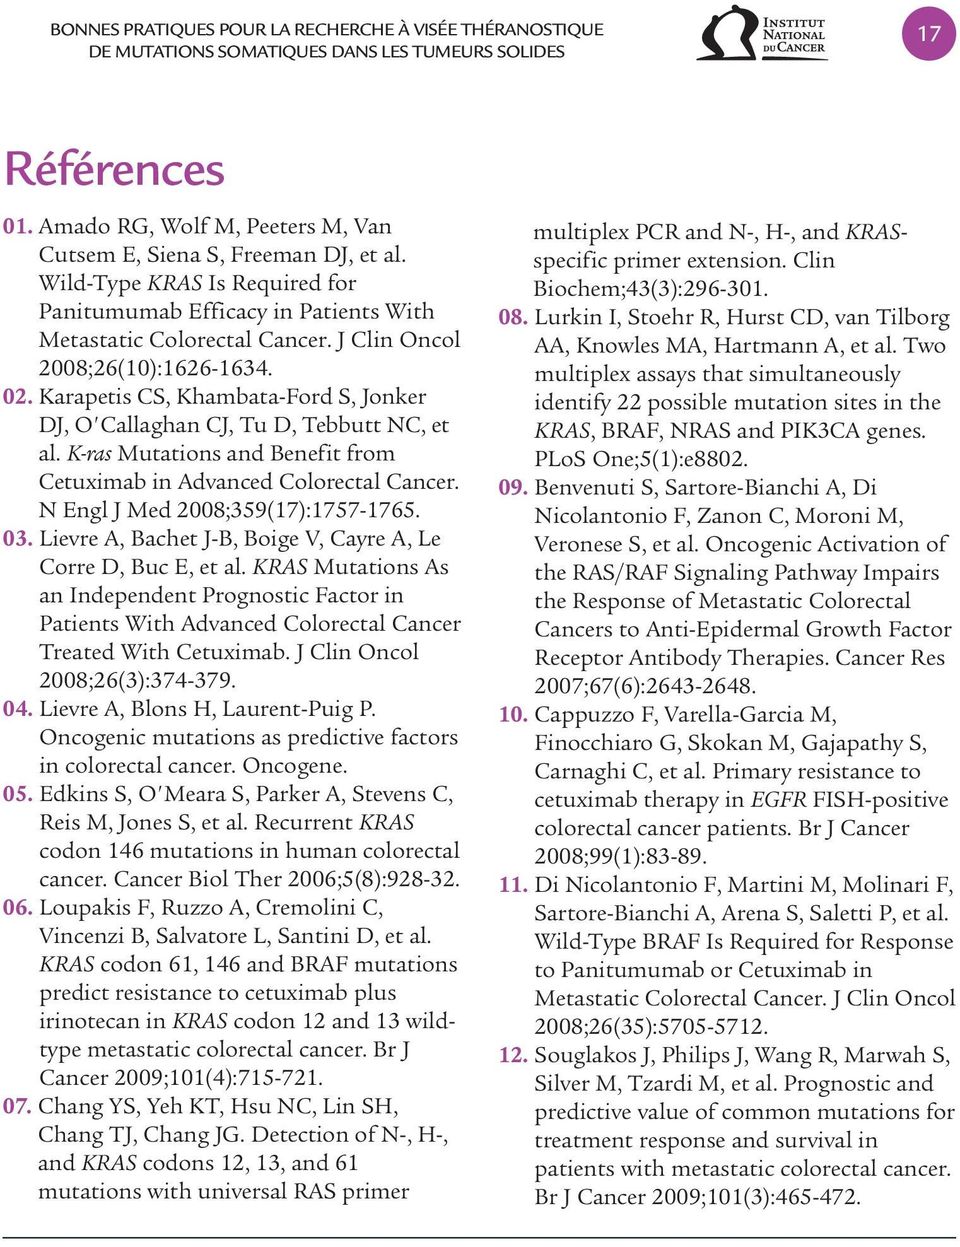 Karapetis CS, Khambata-Ford S, Jonker DJ, O'Callaghan CJ, Tu D, Tebbutt NC, et al. K-ras Mutations and Benefit from Cetuximab in Advanced Colorectal Cancer. N Engl J Med 2008;359(17):1757-1765. 03.